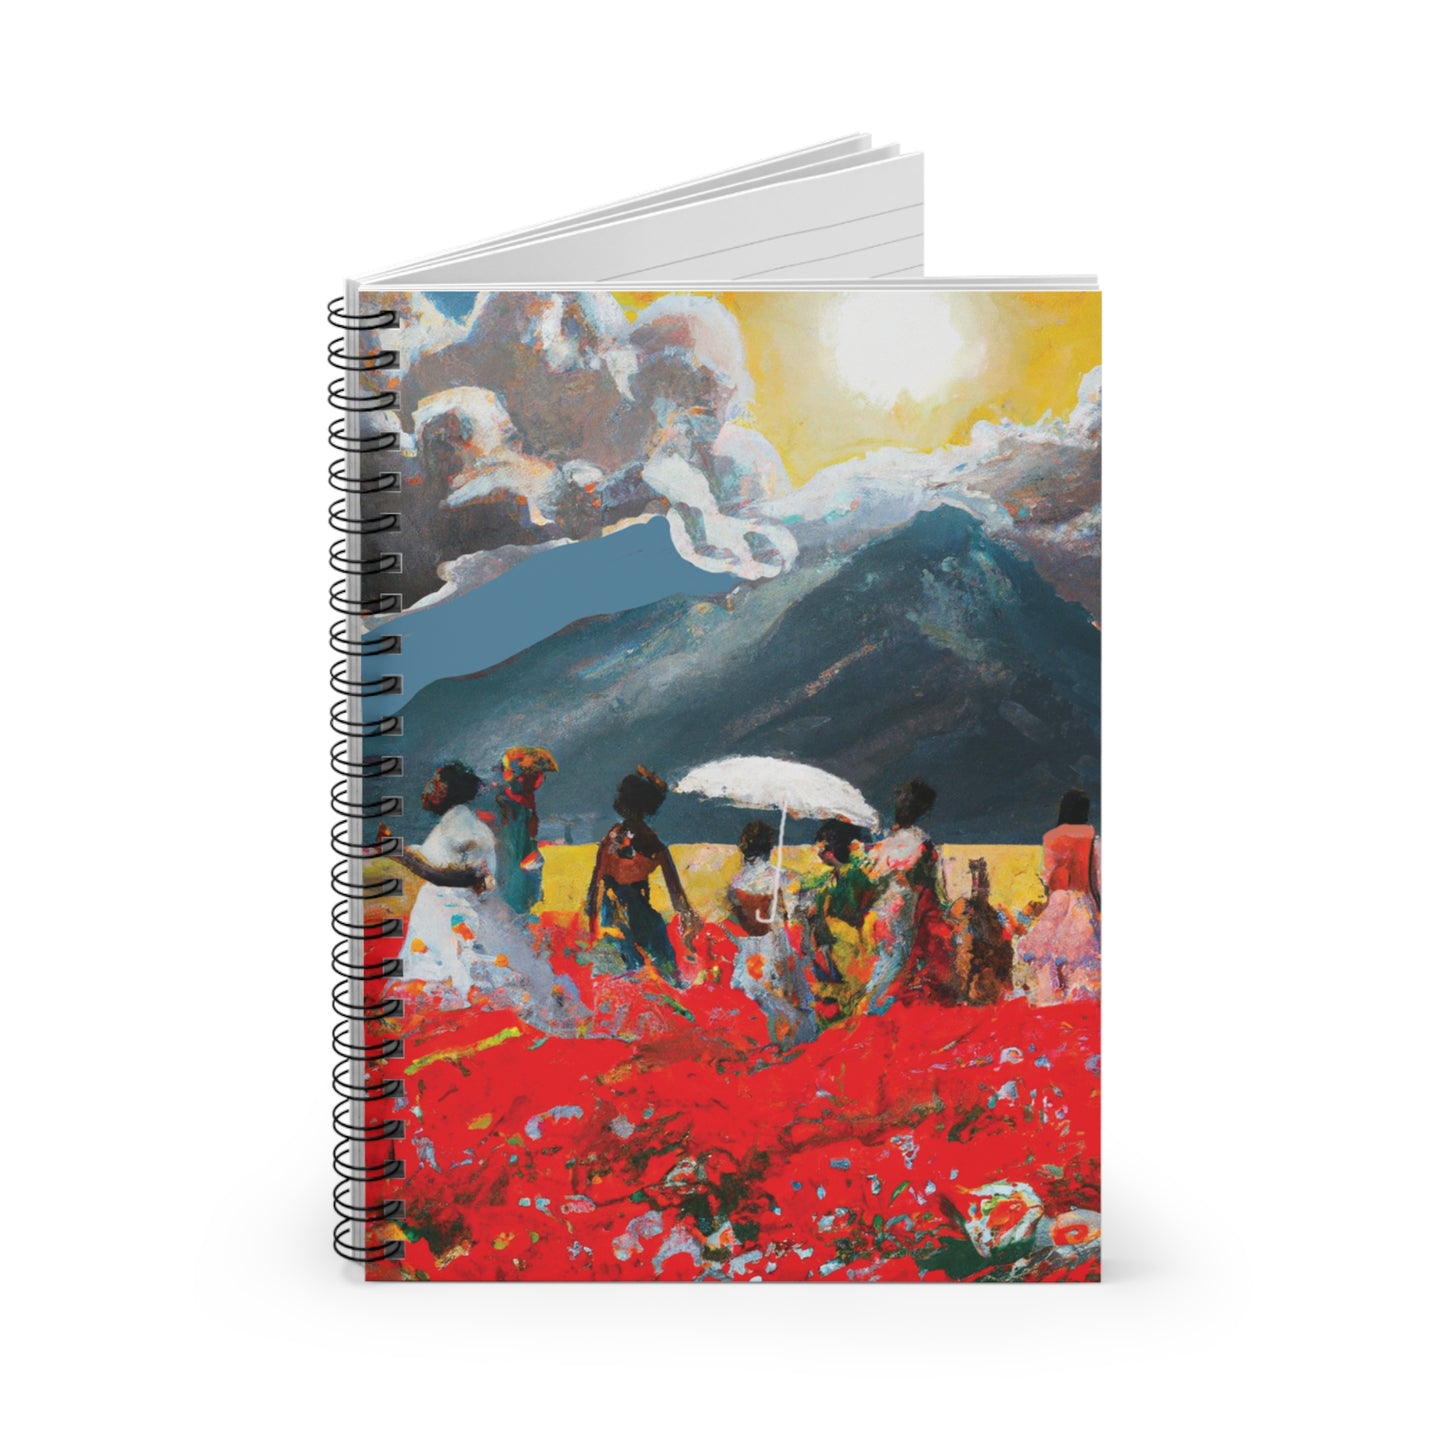 Summitting Journal Notebook